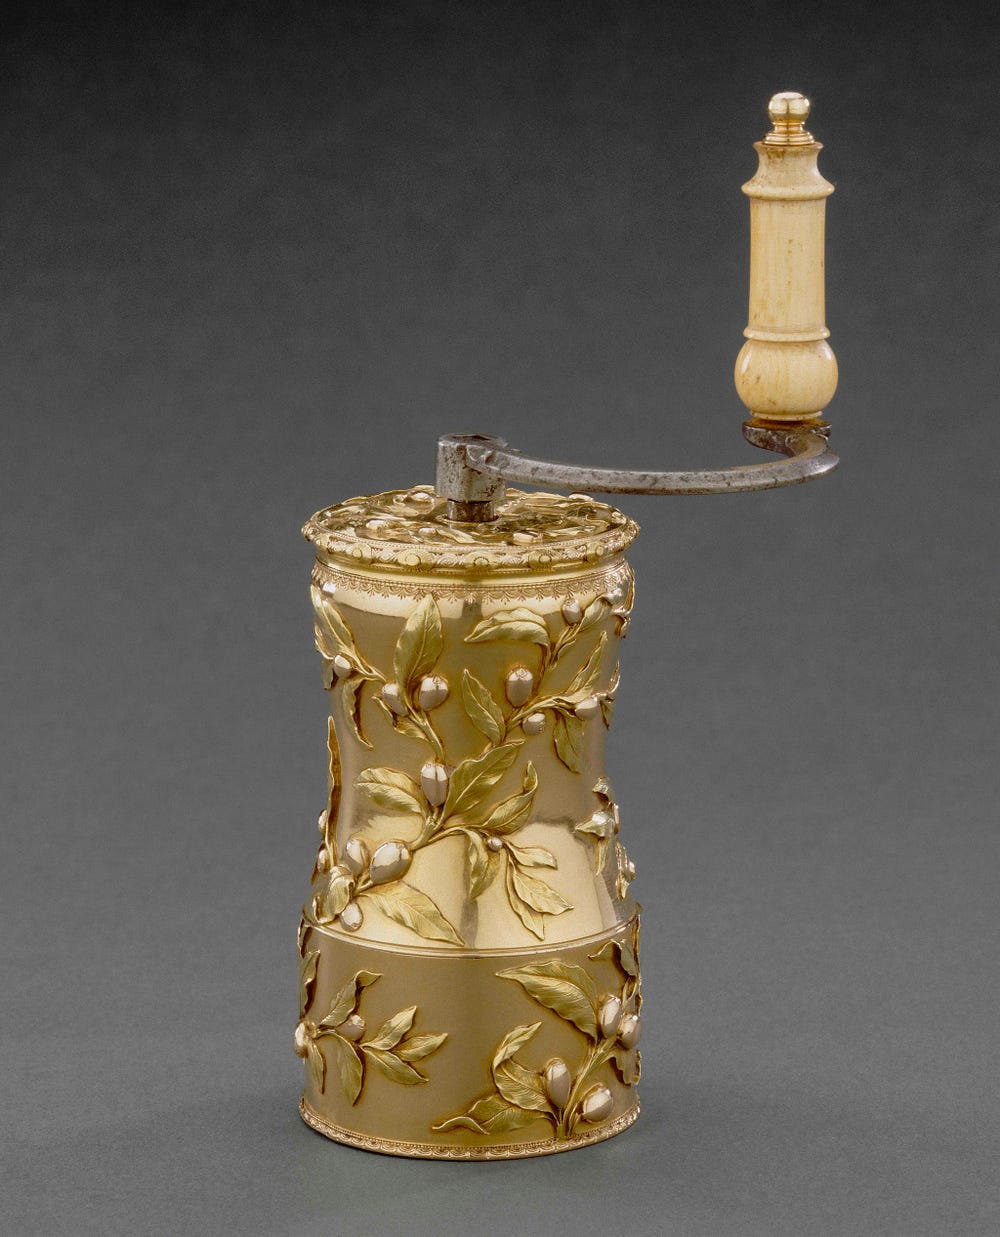 gold coffee grinder